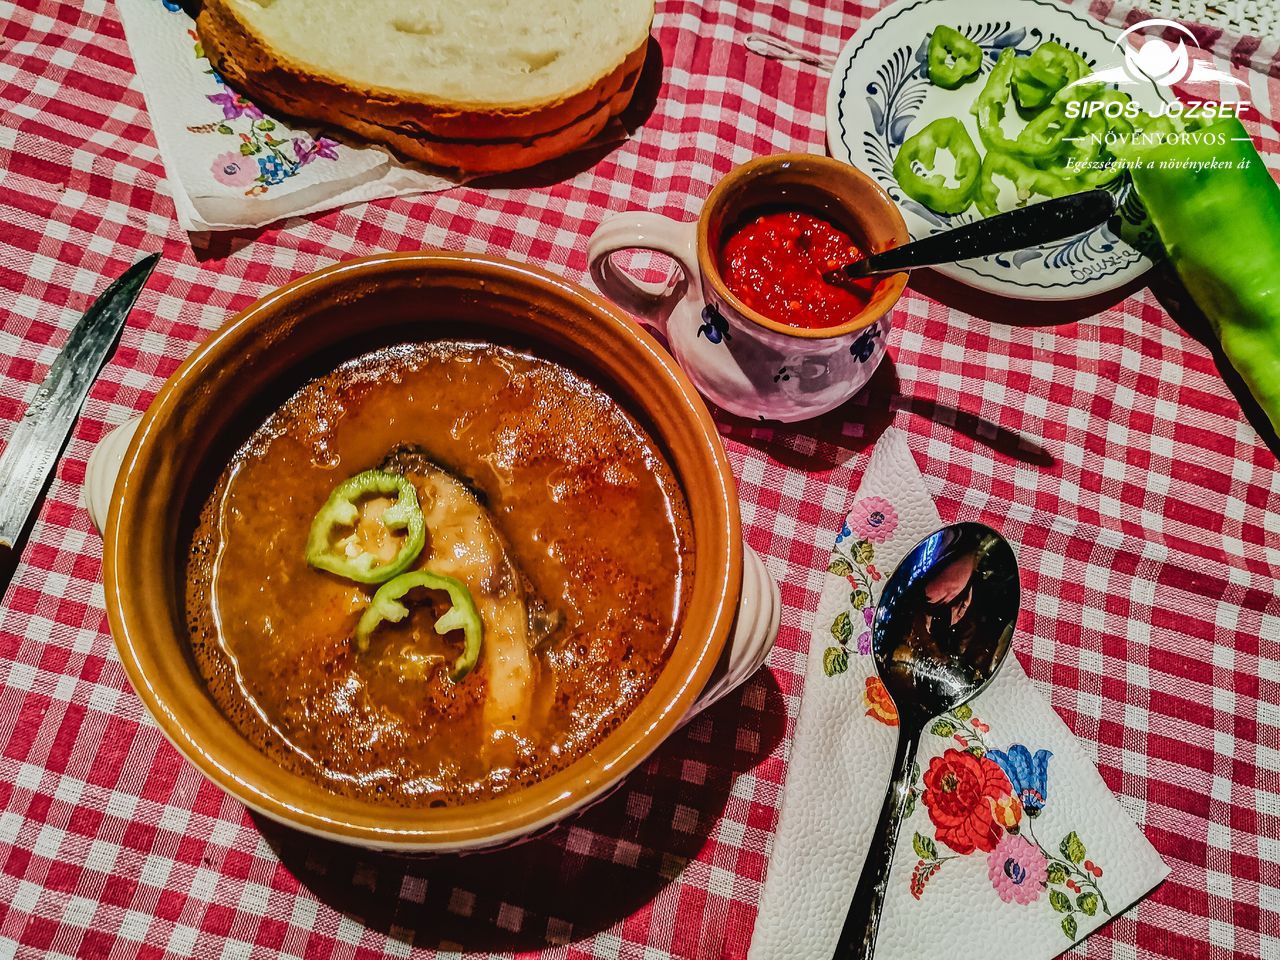 Szeged fisherman’s soup